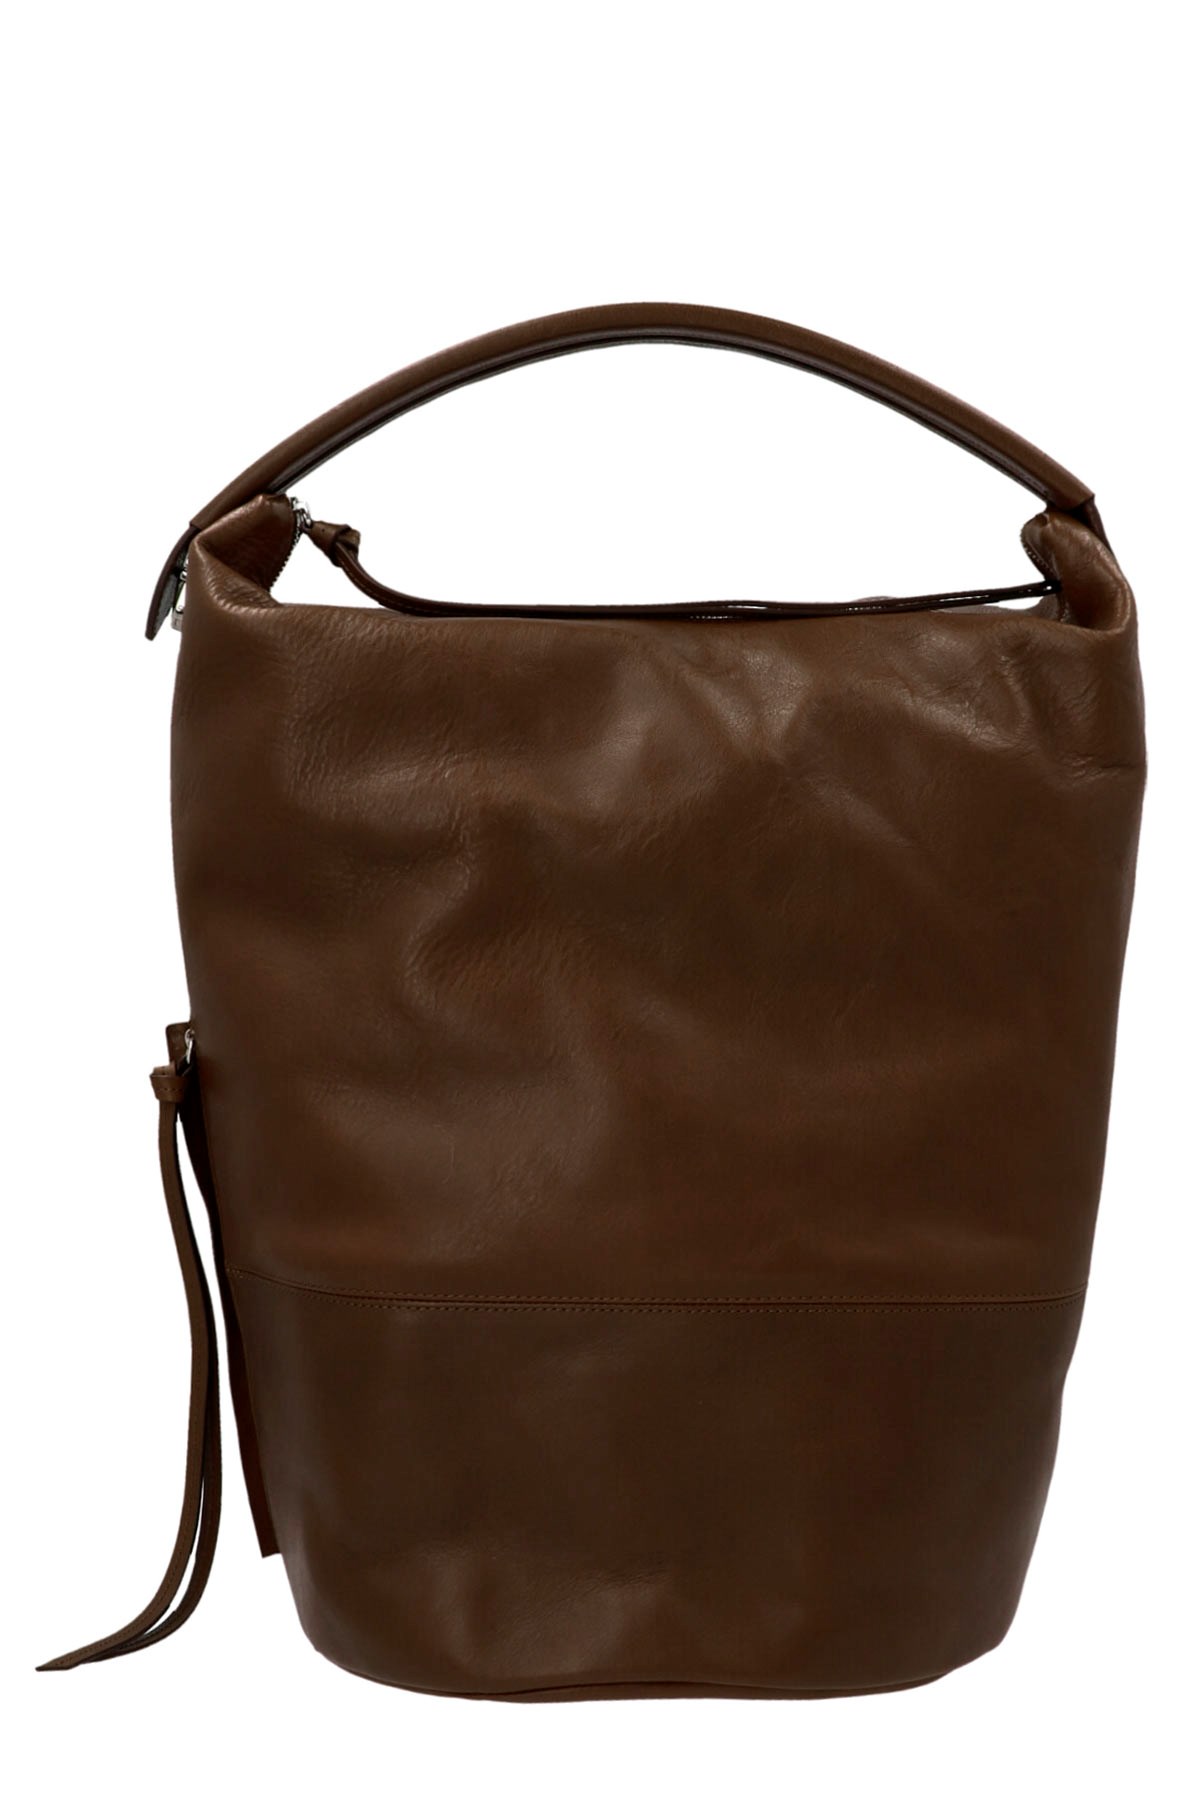 LEMAIRE Smooth Black Leather Handbag